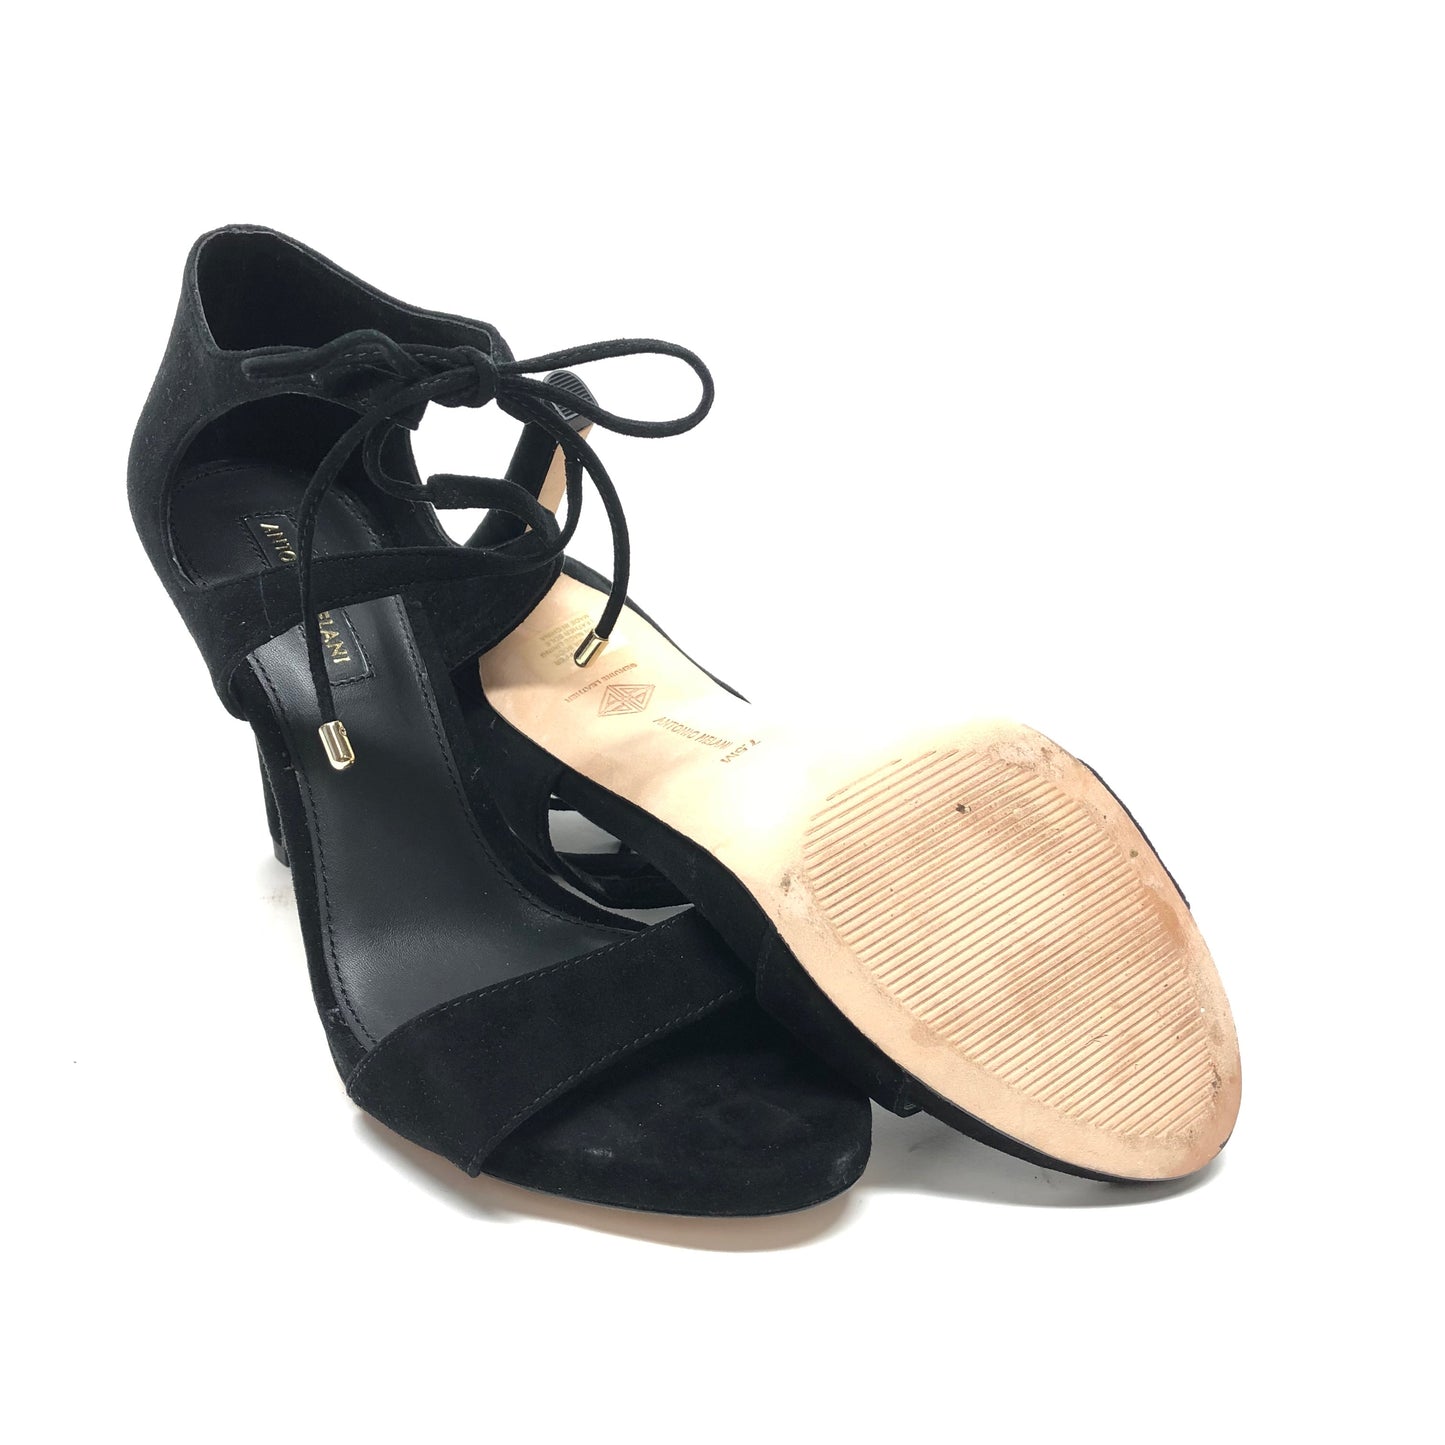 Black Shoes Heels Stiletto Antonio Melani, Size 7.5